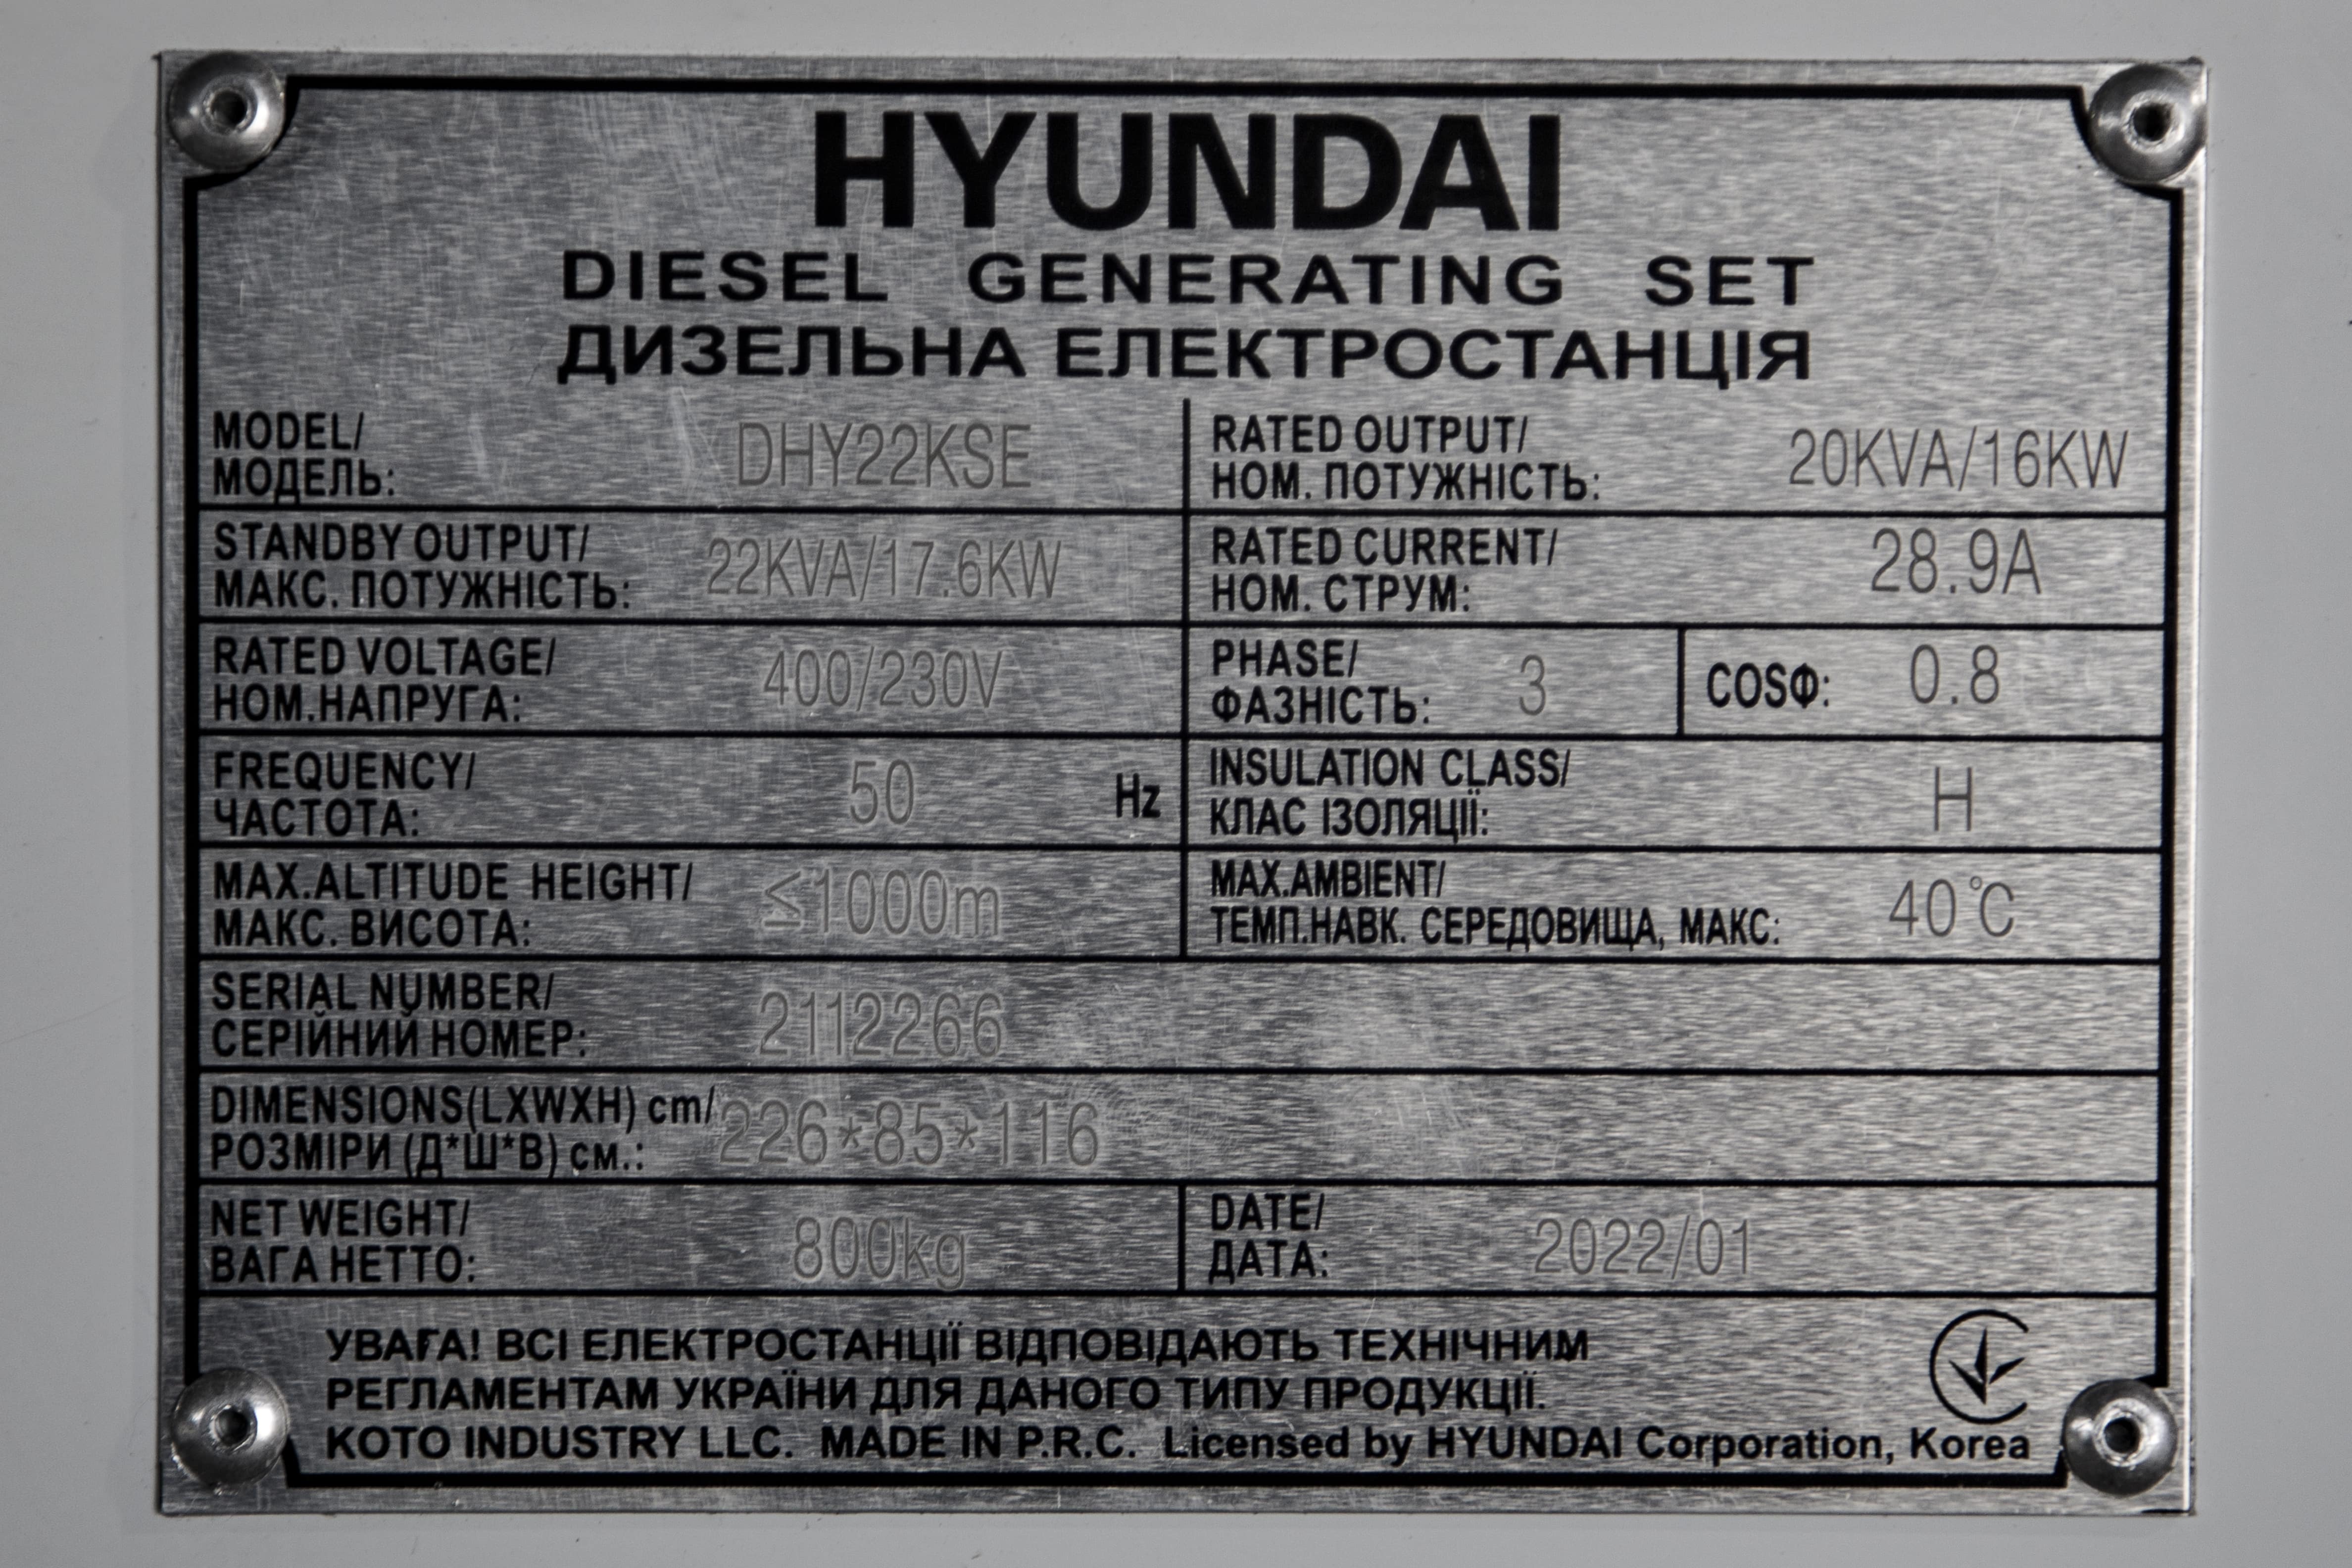 Генератор Hyundai DHY 22KSE цена 368340.00 грн - фотография 2